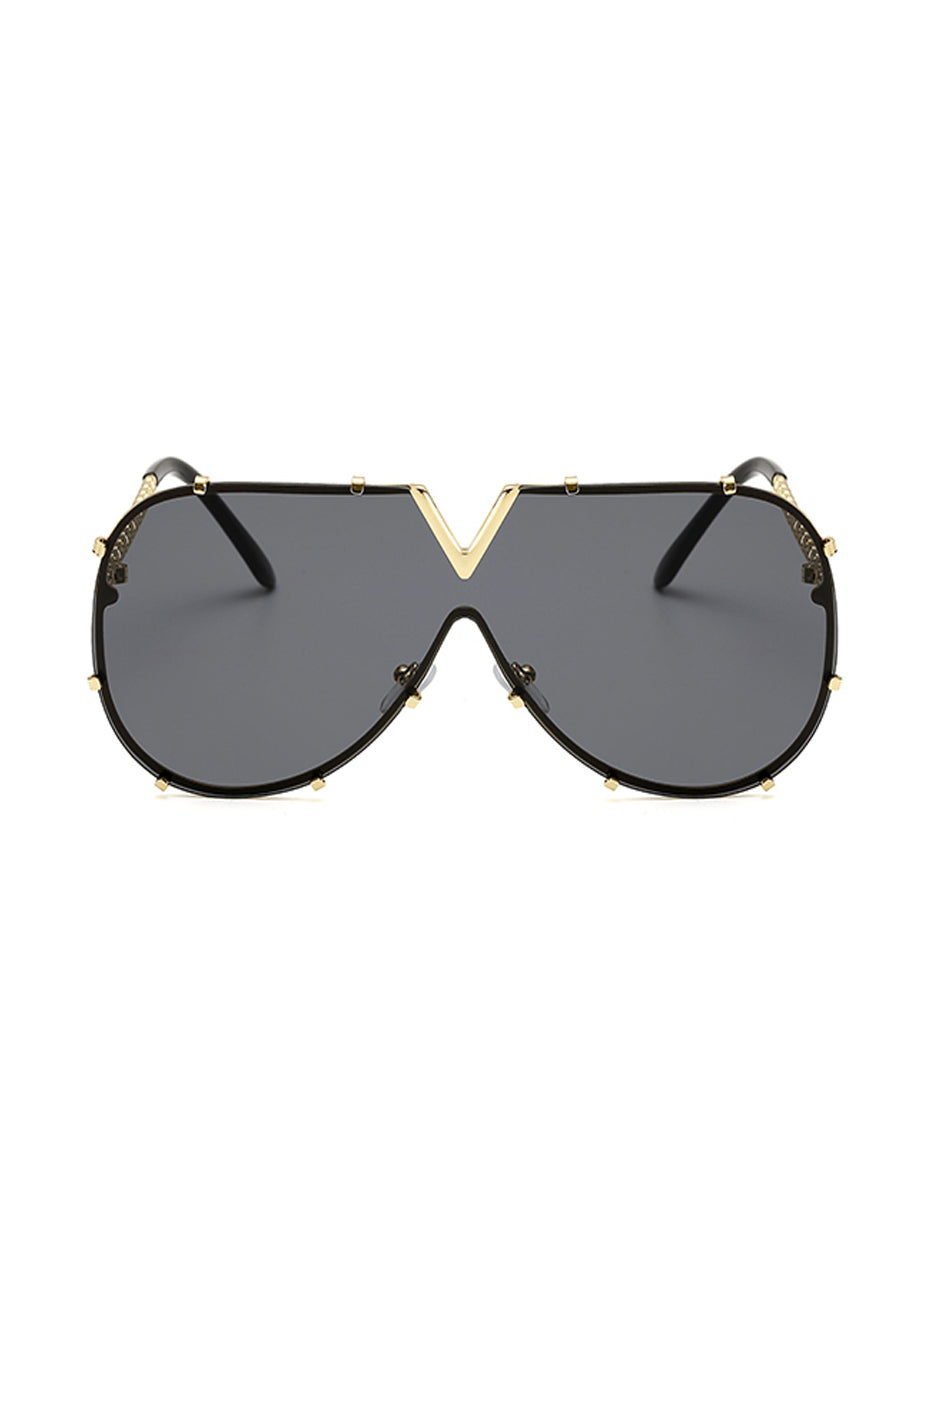 Cara Sunglasses - Black & Gold